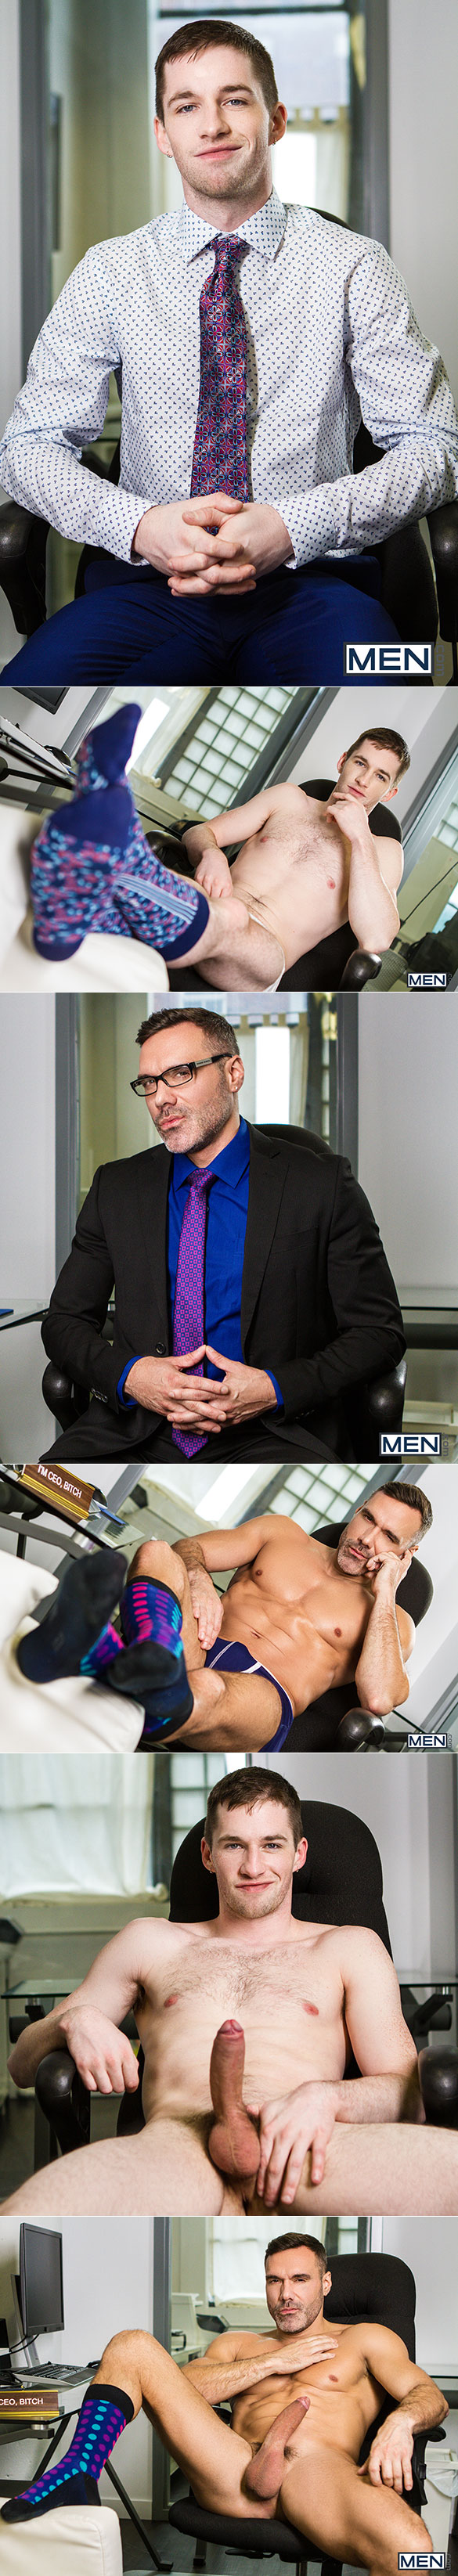 Men.com: Manuel Skye barebacks Thyle Knoxx in "ASSisting the CEO"